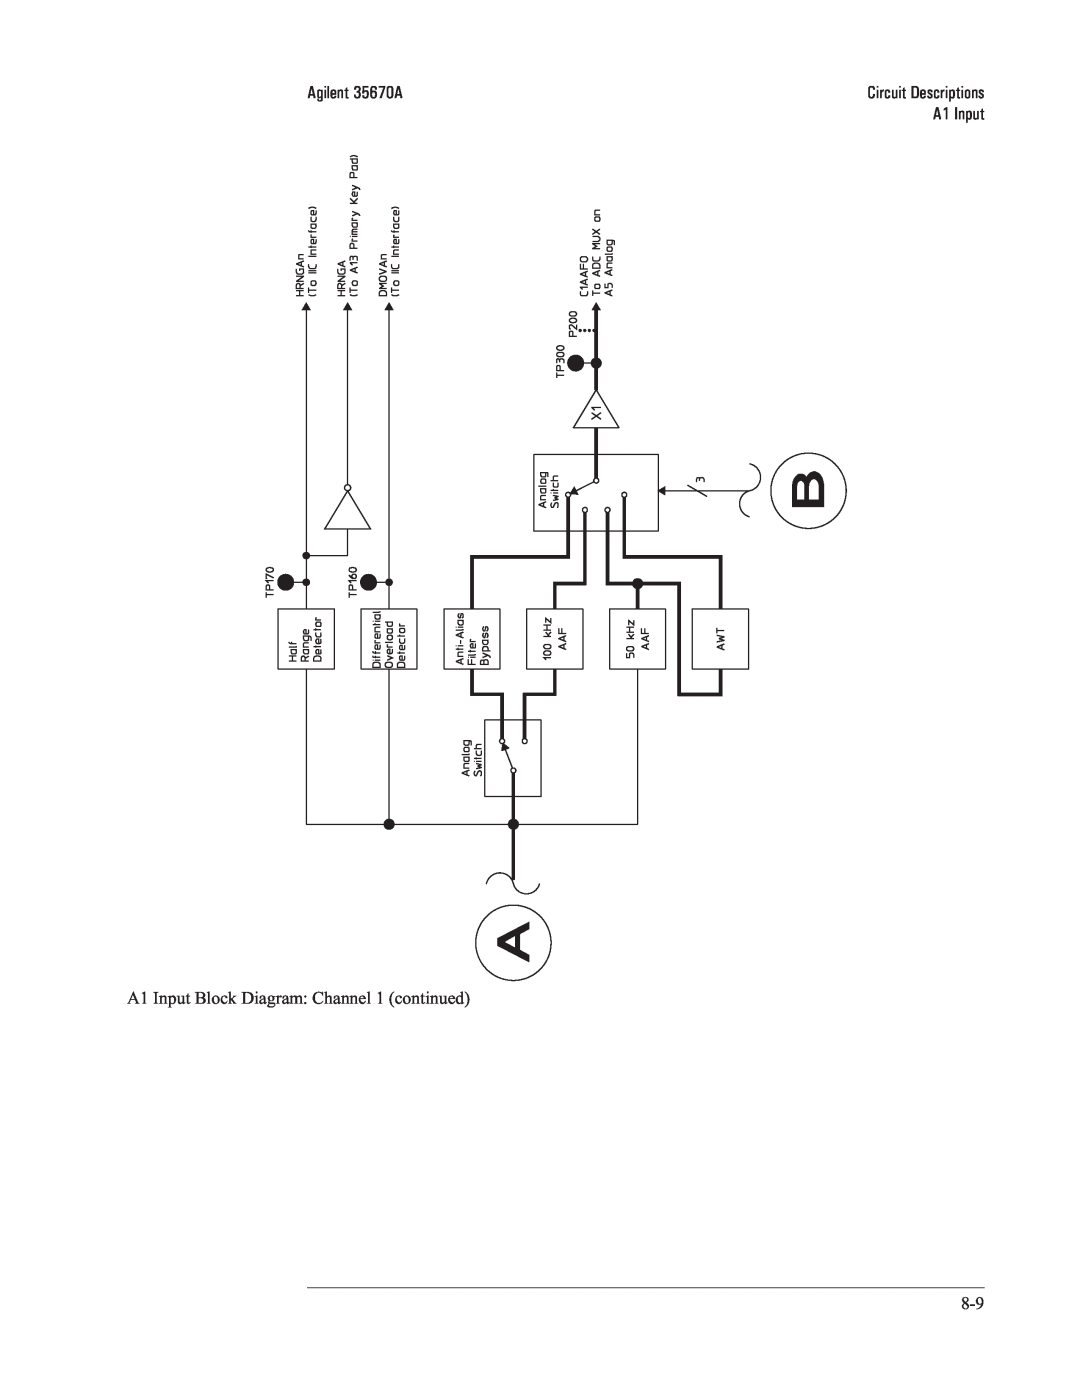 Agilent Technologies 35670-90066 manual Agilent 35670A, Circuit Descriptions, A1 Input 